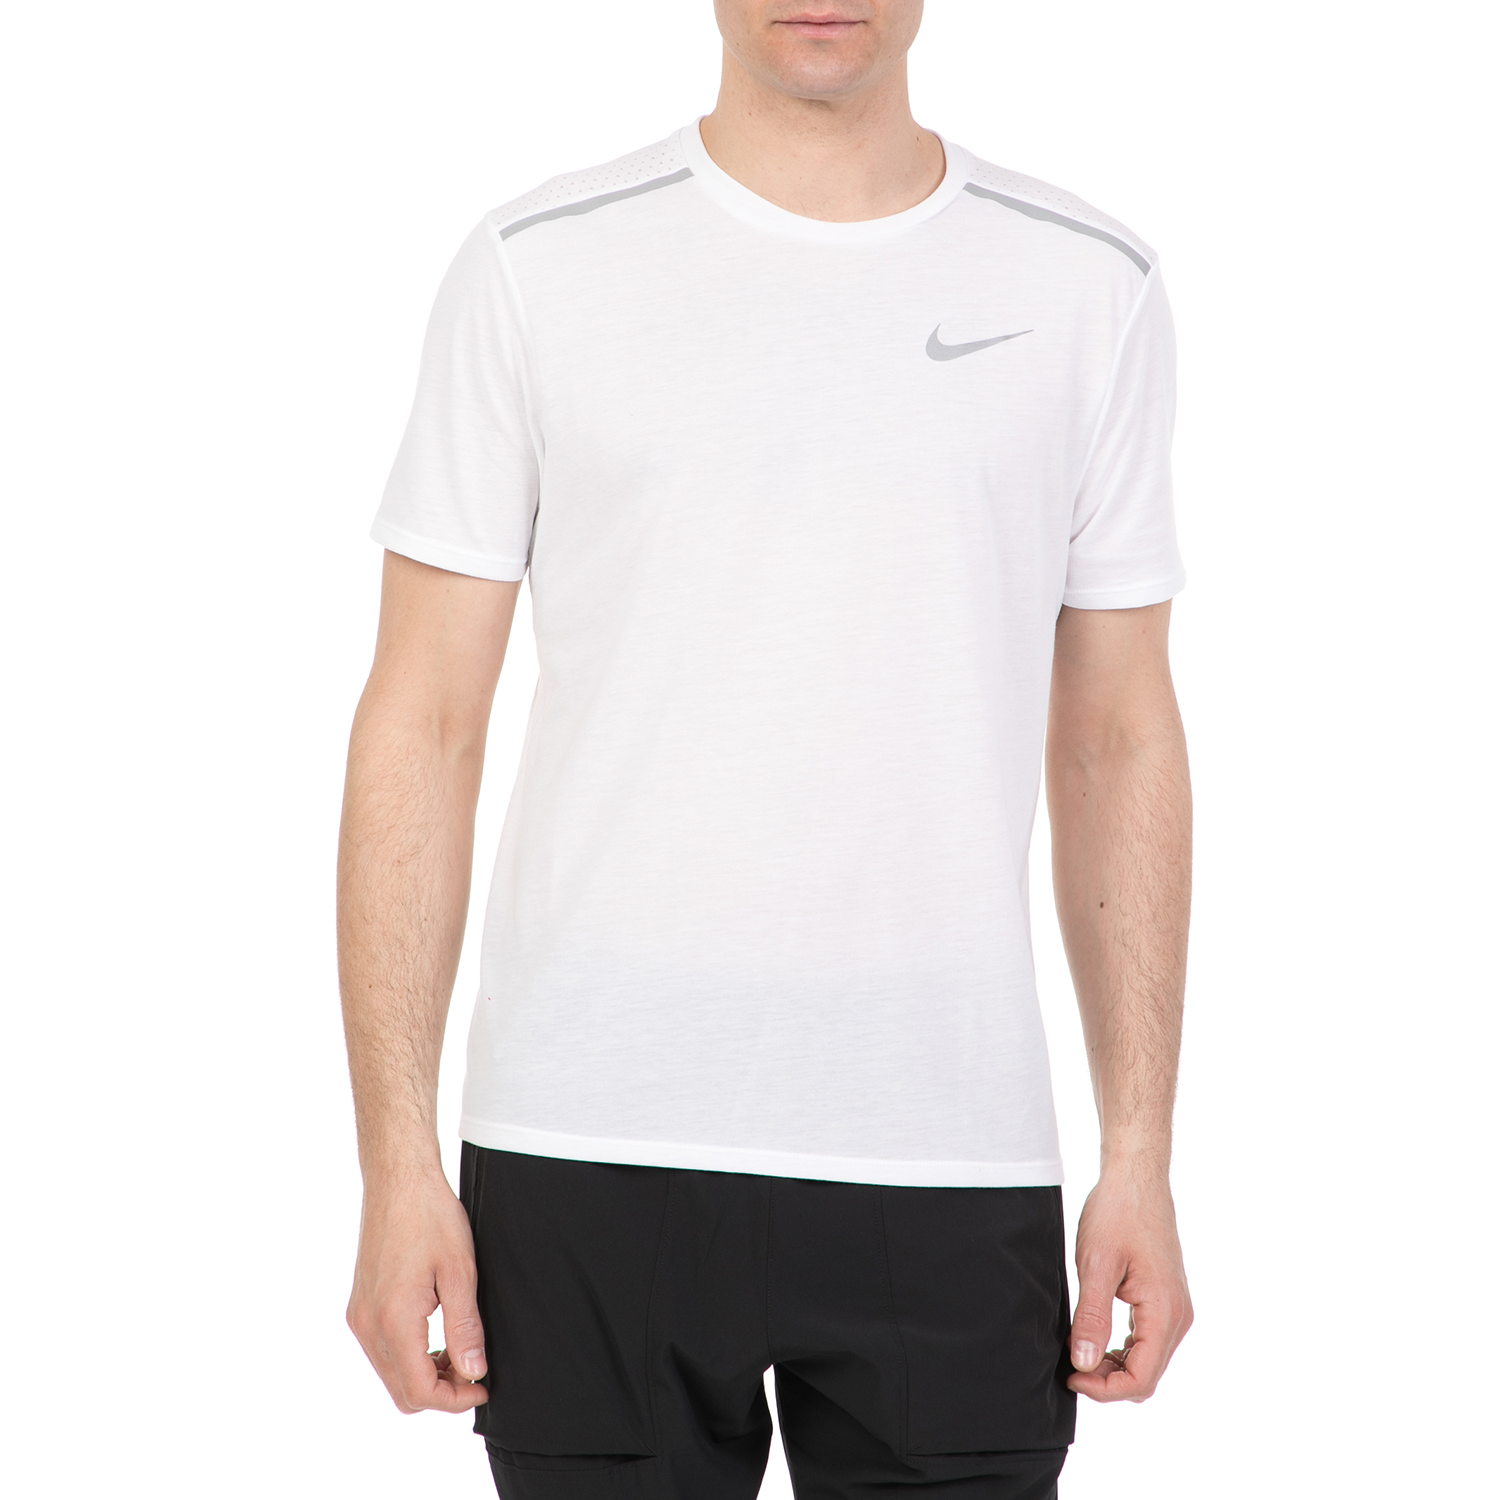 NIKE - Ανδρική κοντομάνικη μπούζα Nike TAILWIND λευκή Ανδρικά/Ρούχα/Αθλητικά/T-shirt